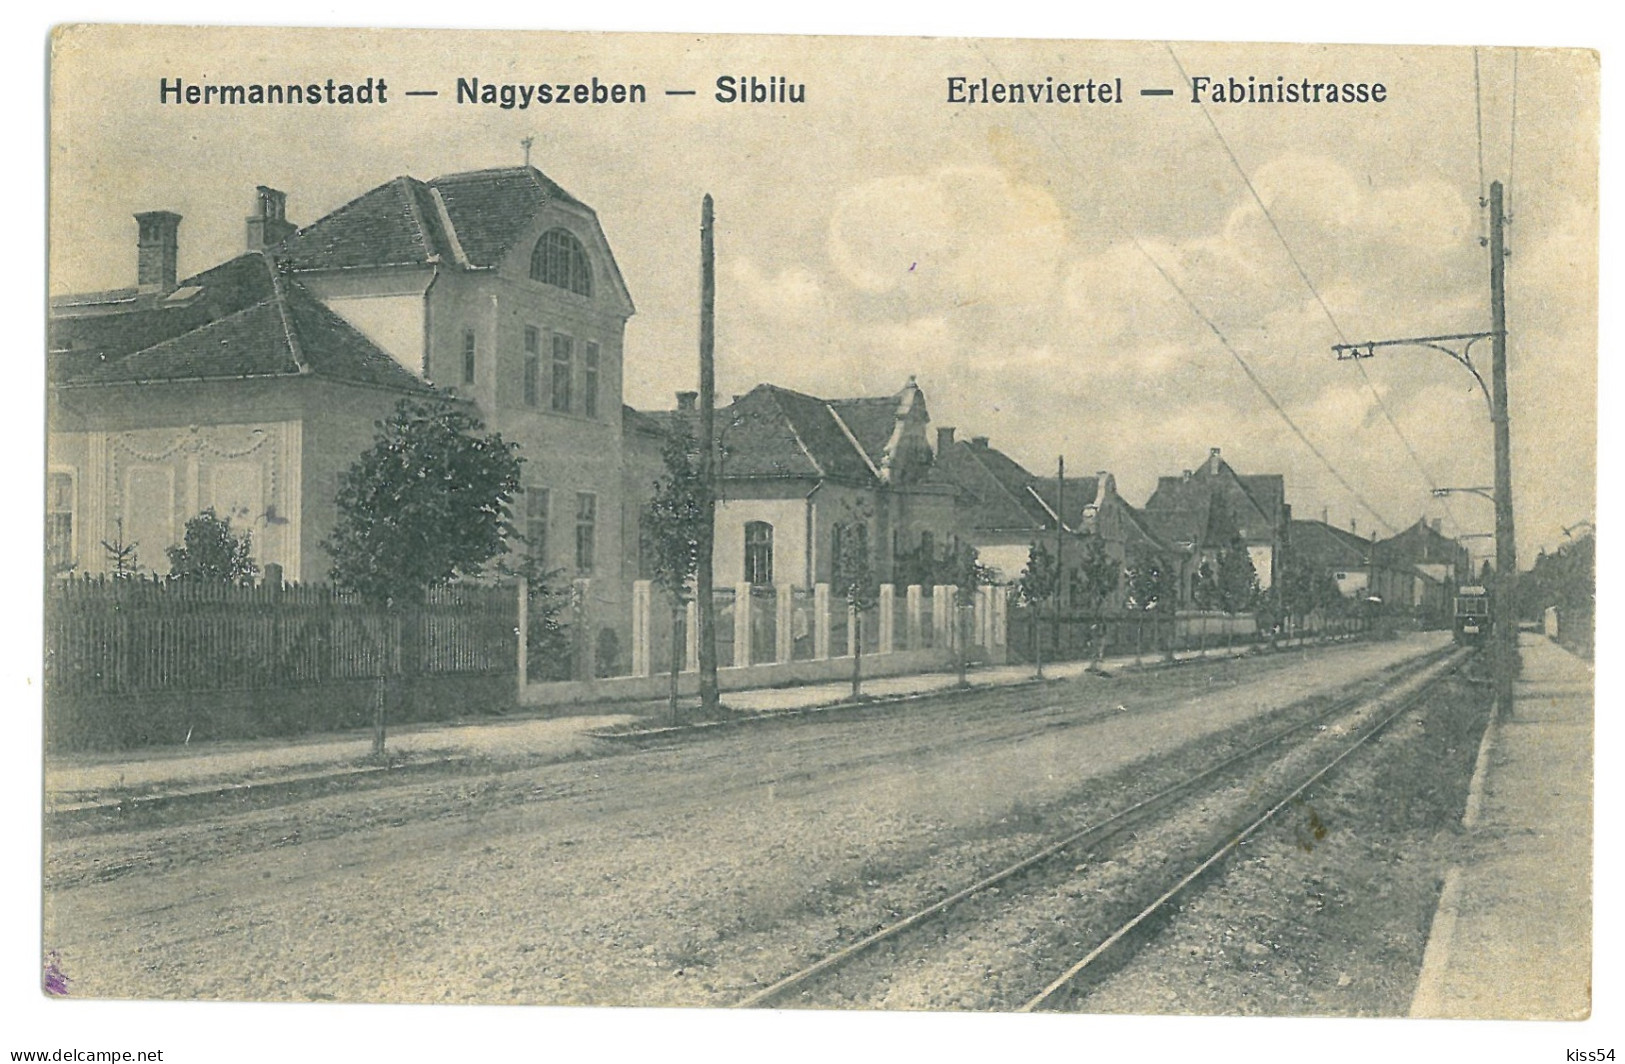 RO 77 - 23704 SIBIU, Tram, Romania - Old Postcard, CENSOR - Used - 1916 - Rumania